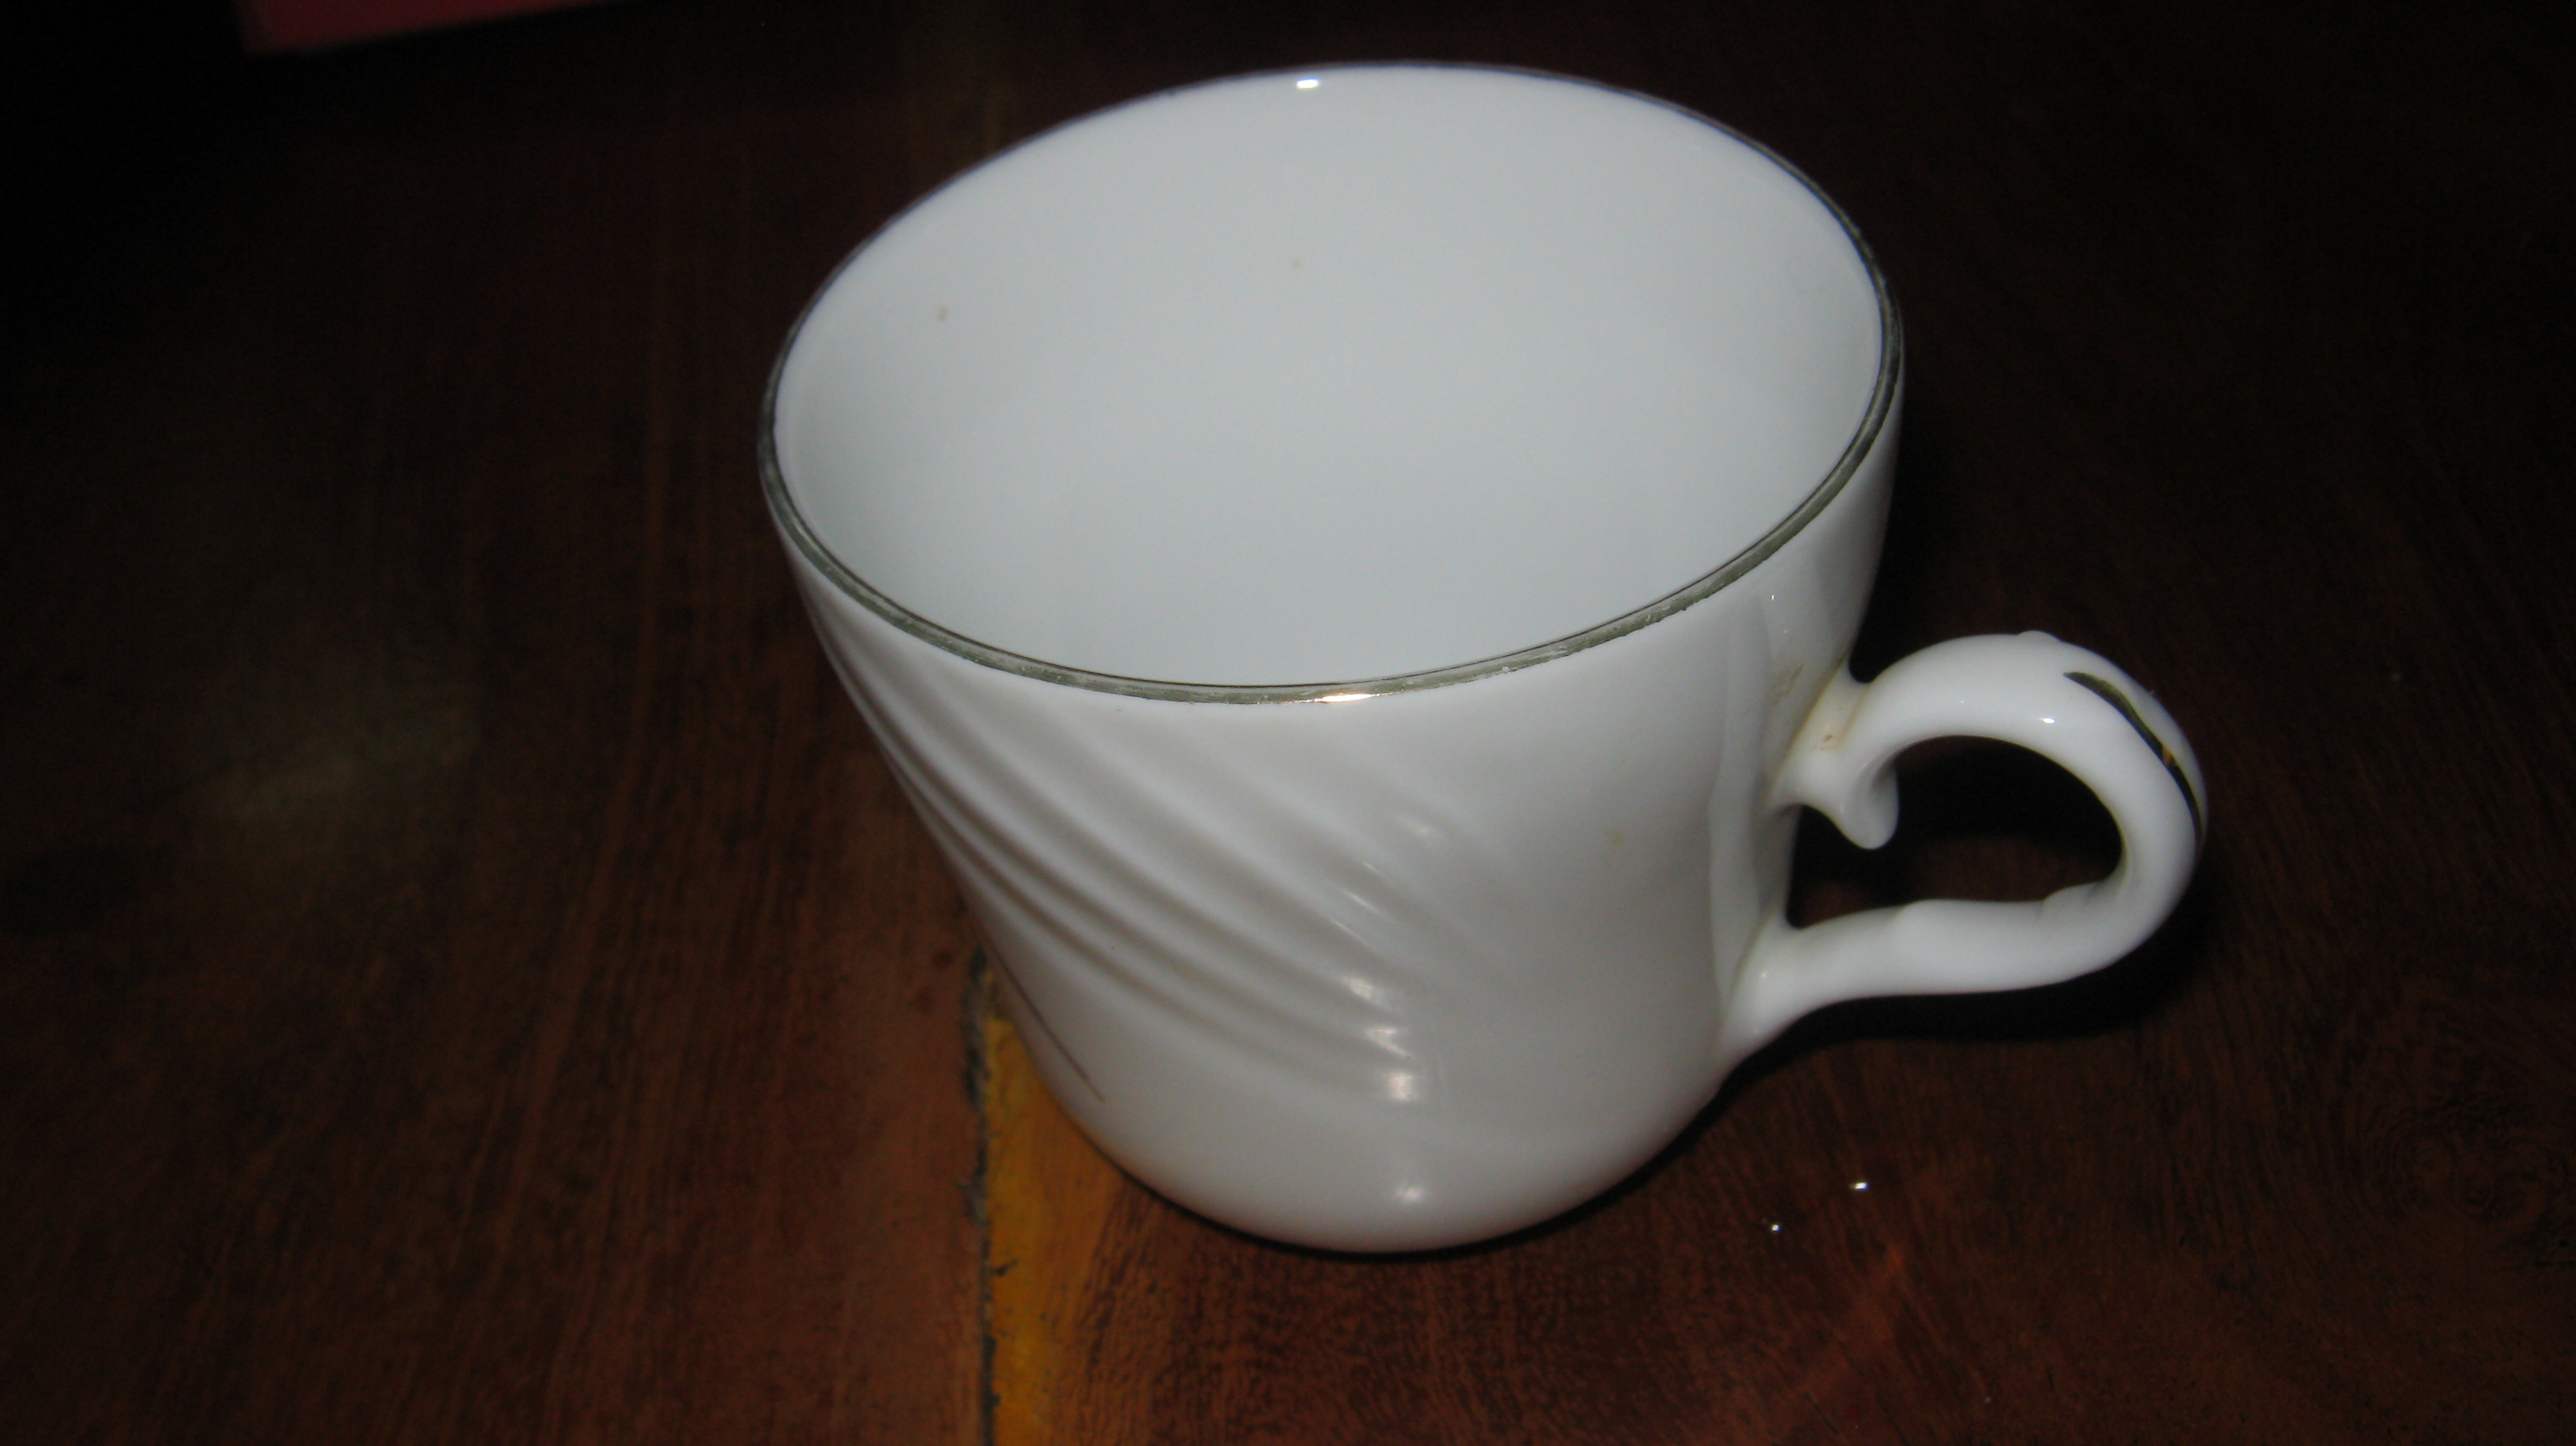 https://upload.wikimedia.org/wikipedia/commons/9/92/Kitchenware_Tea_Cup_Rezowan_%283%29.JPG